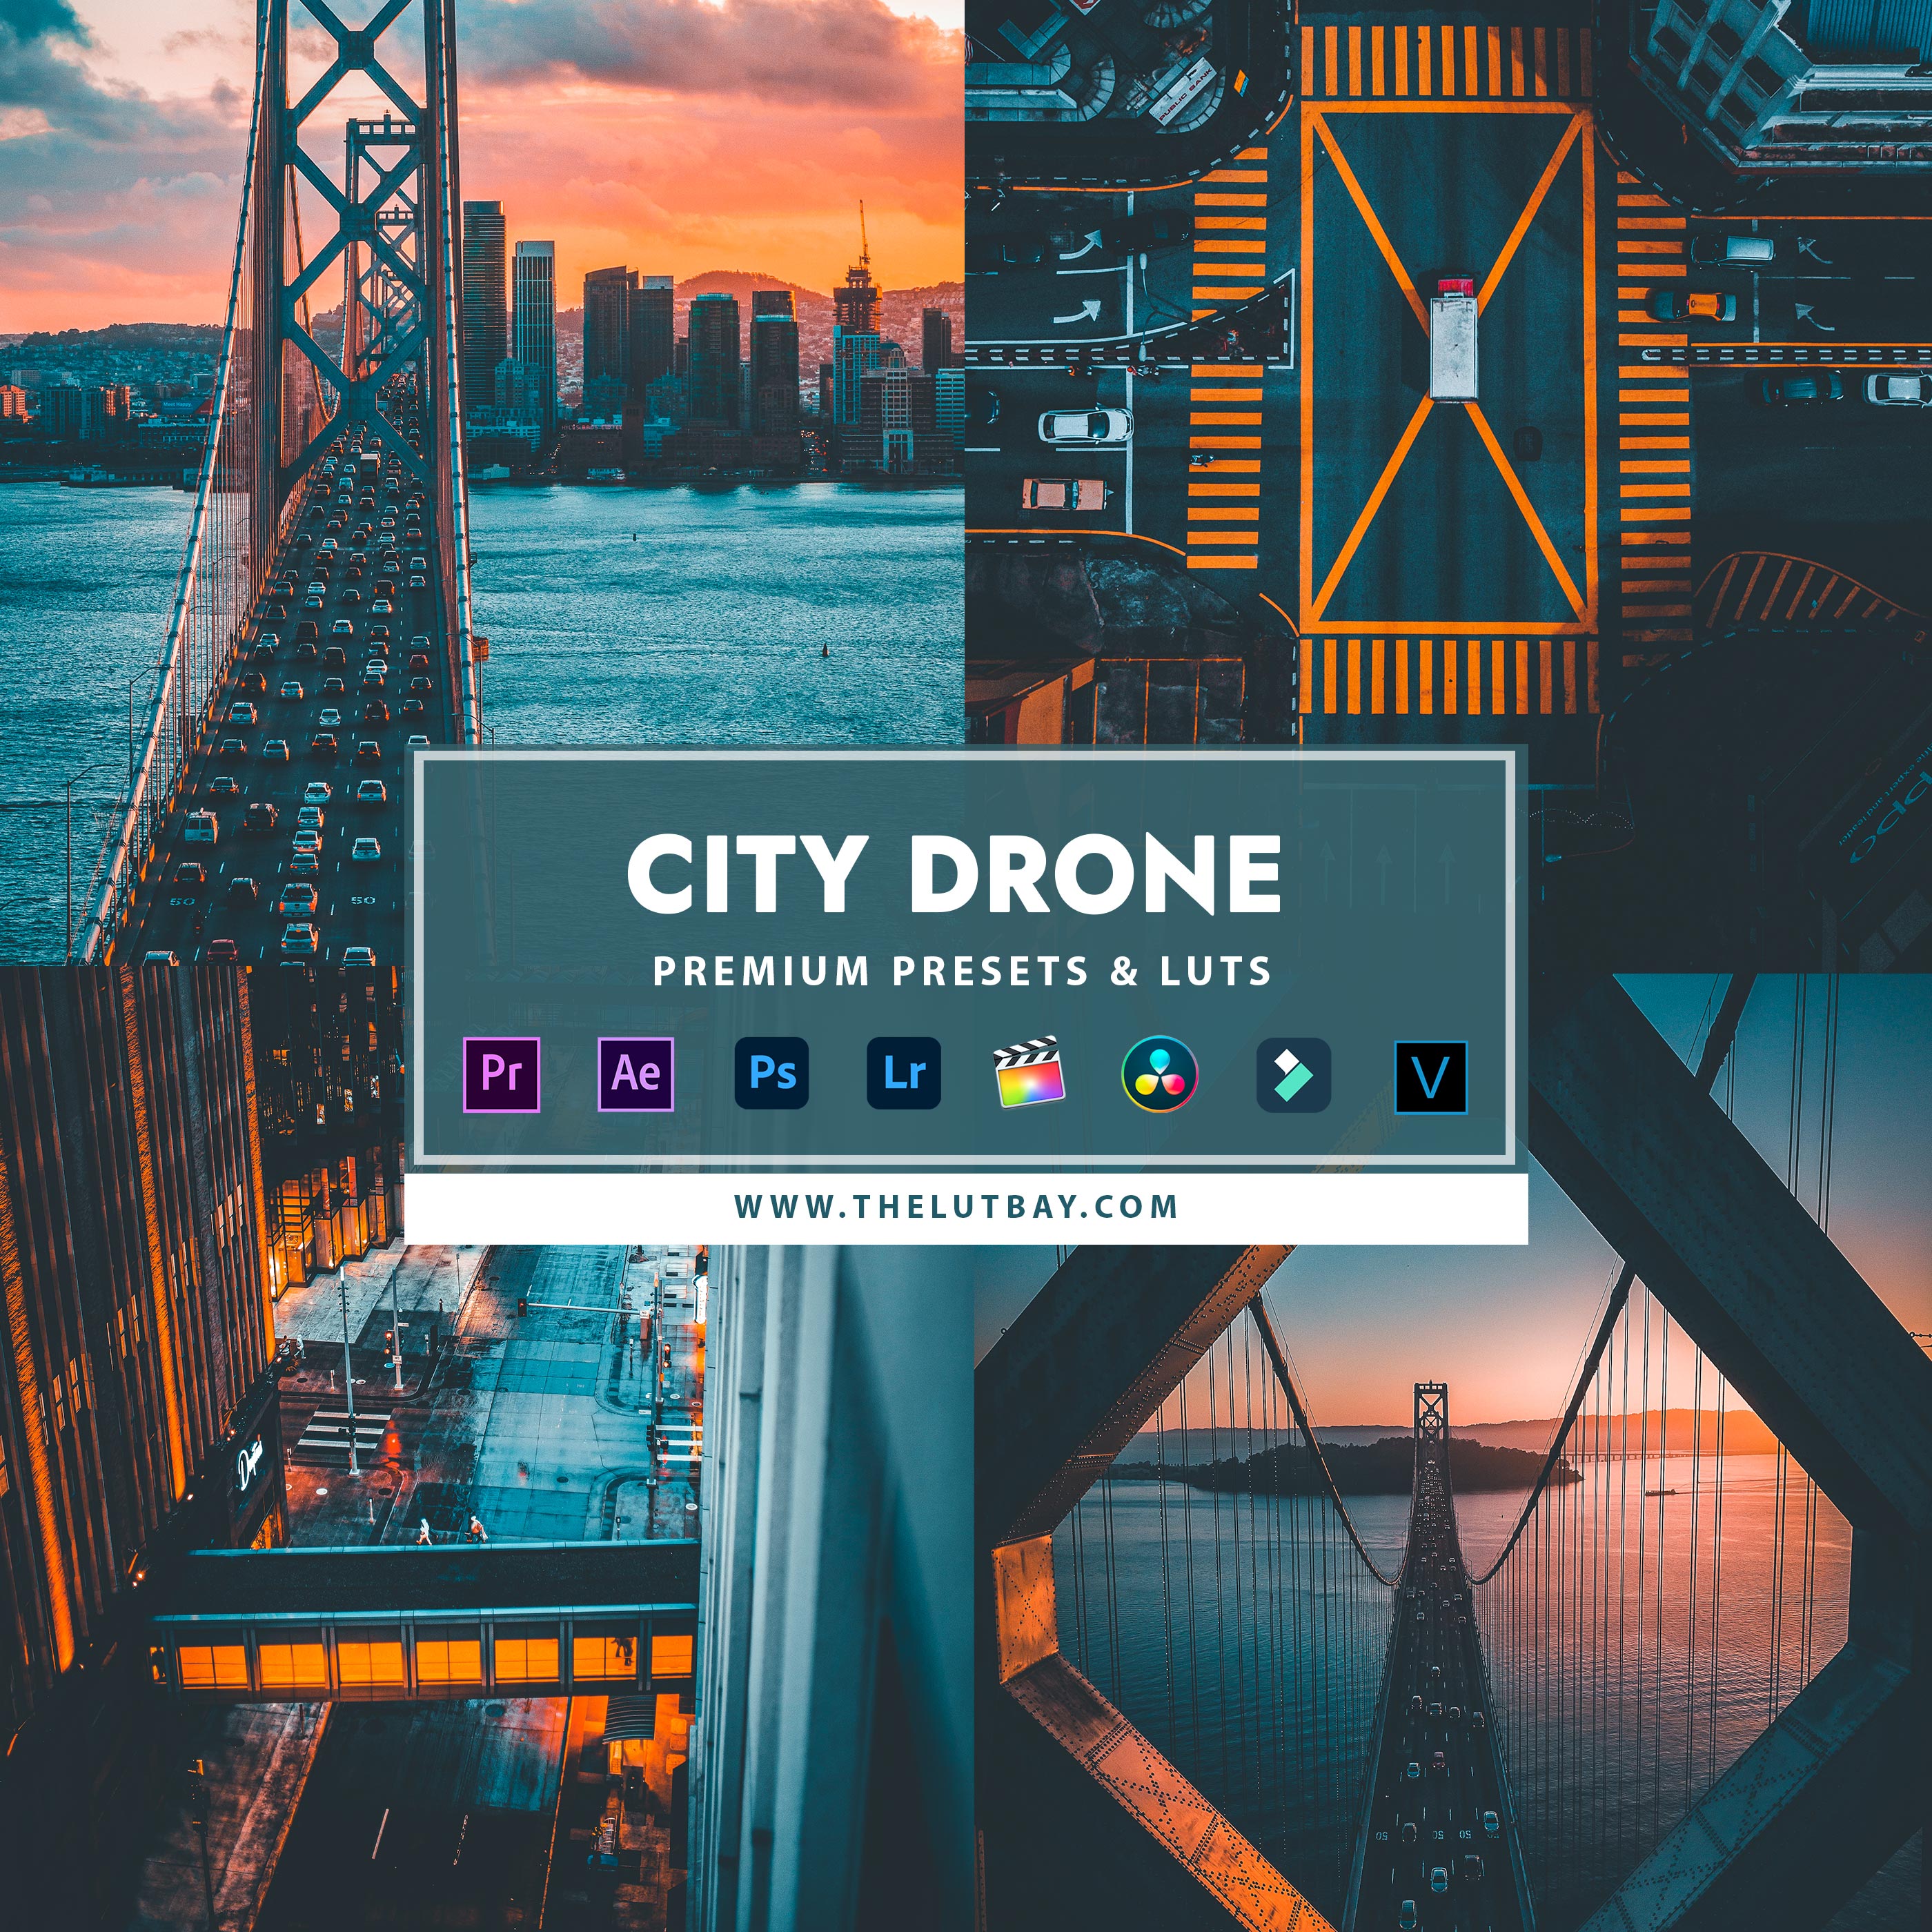 CITY DRONE